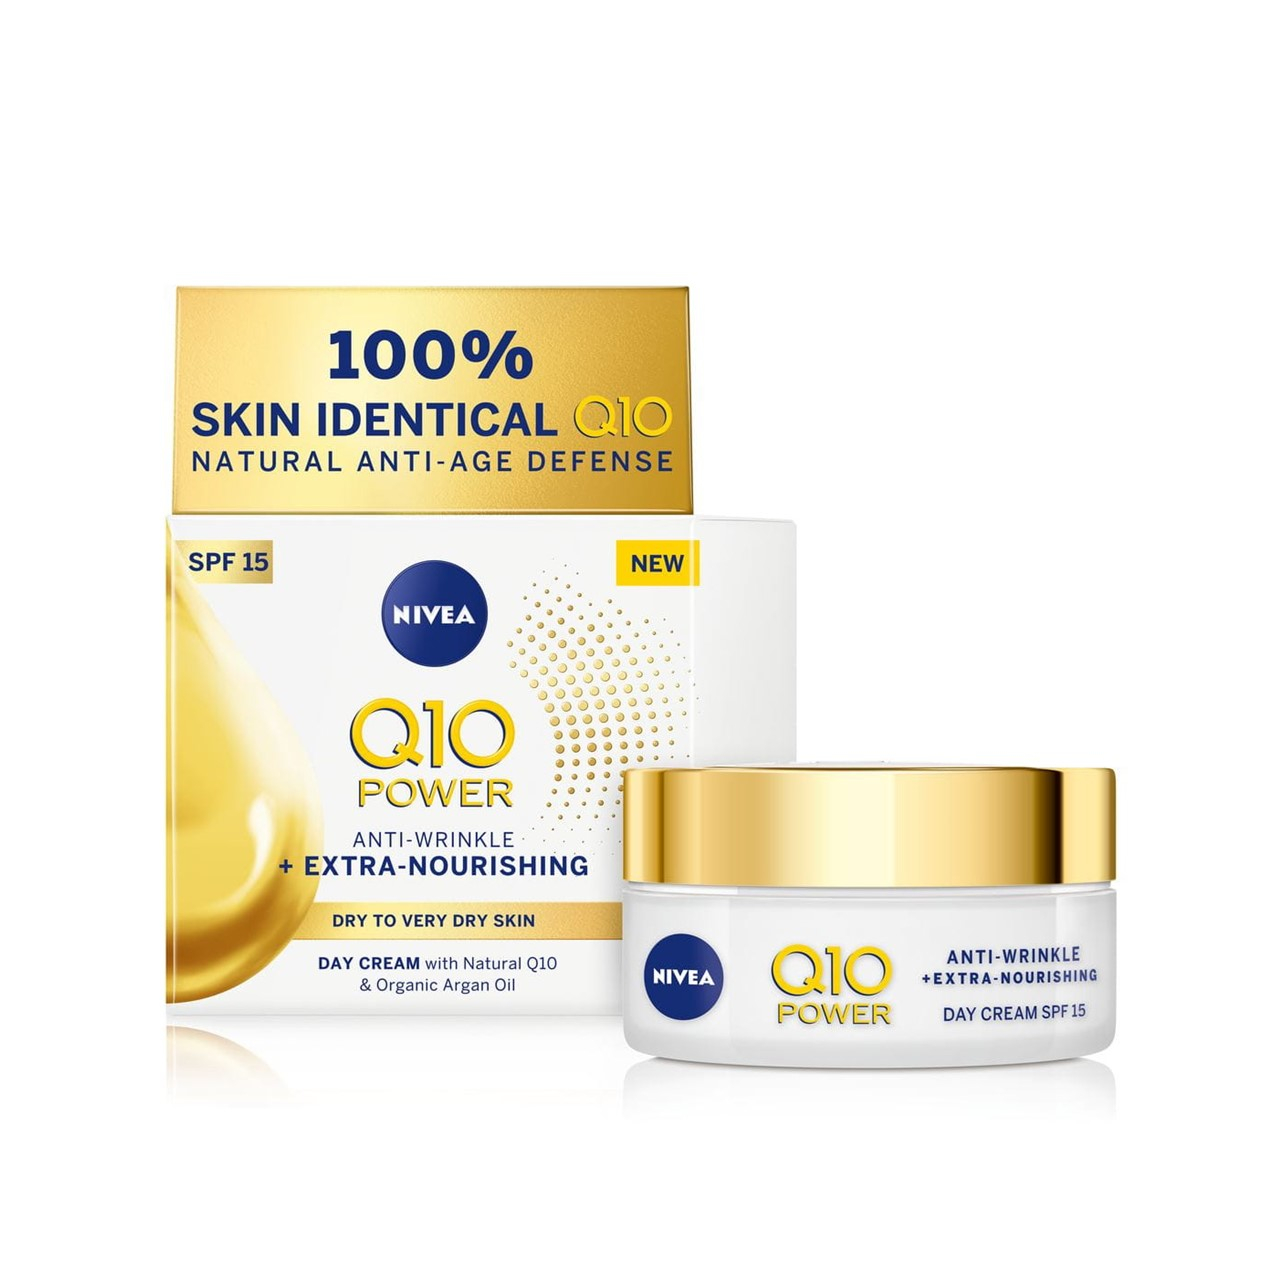 https://static.beautytocare.com/media/catalog/product/n/i/nivea-q10-power-anti-wrinkle-extra-nourishing-day-cream-spf15-50ml.jpg